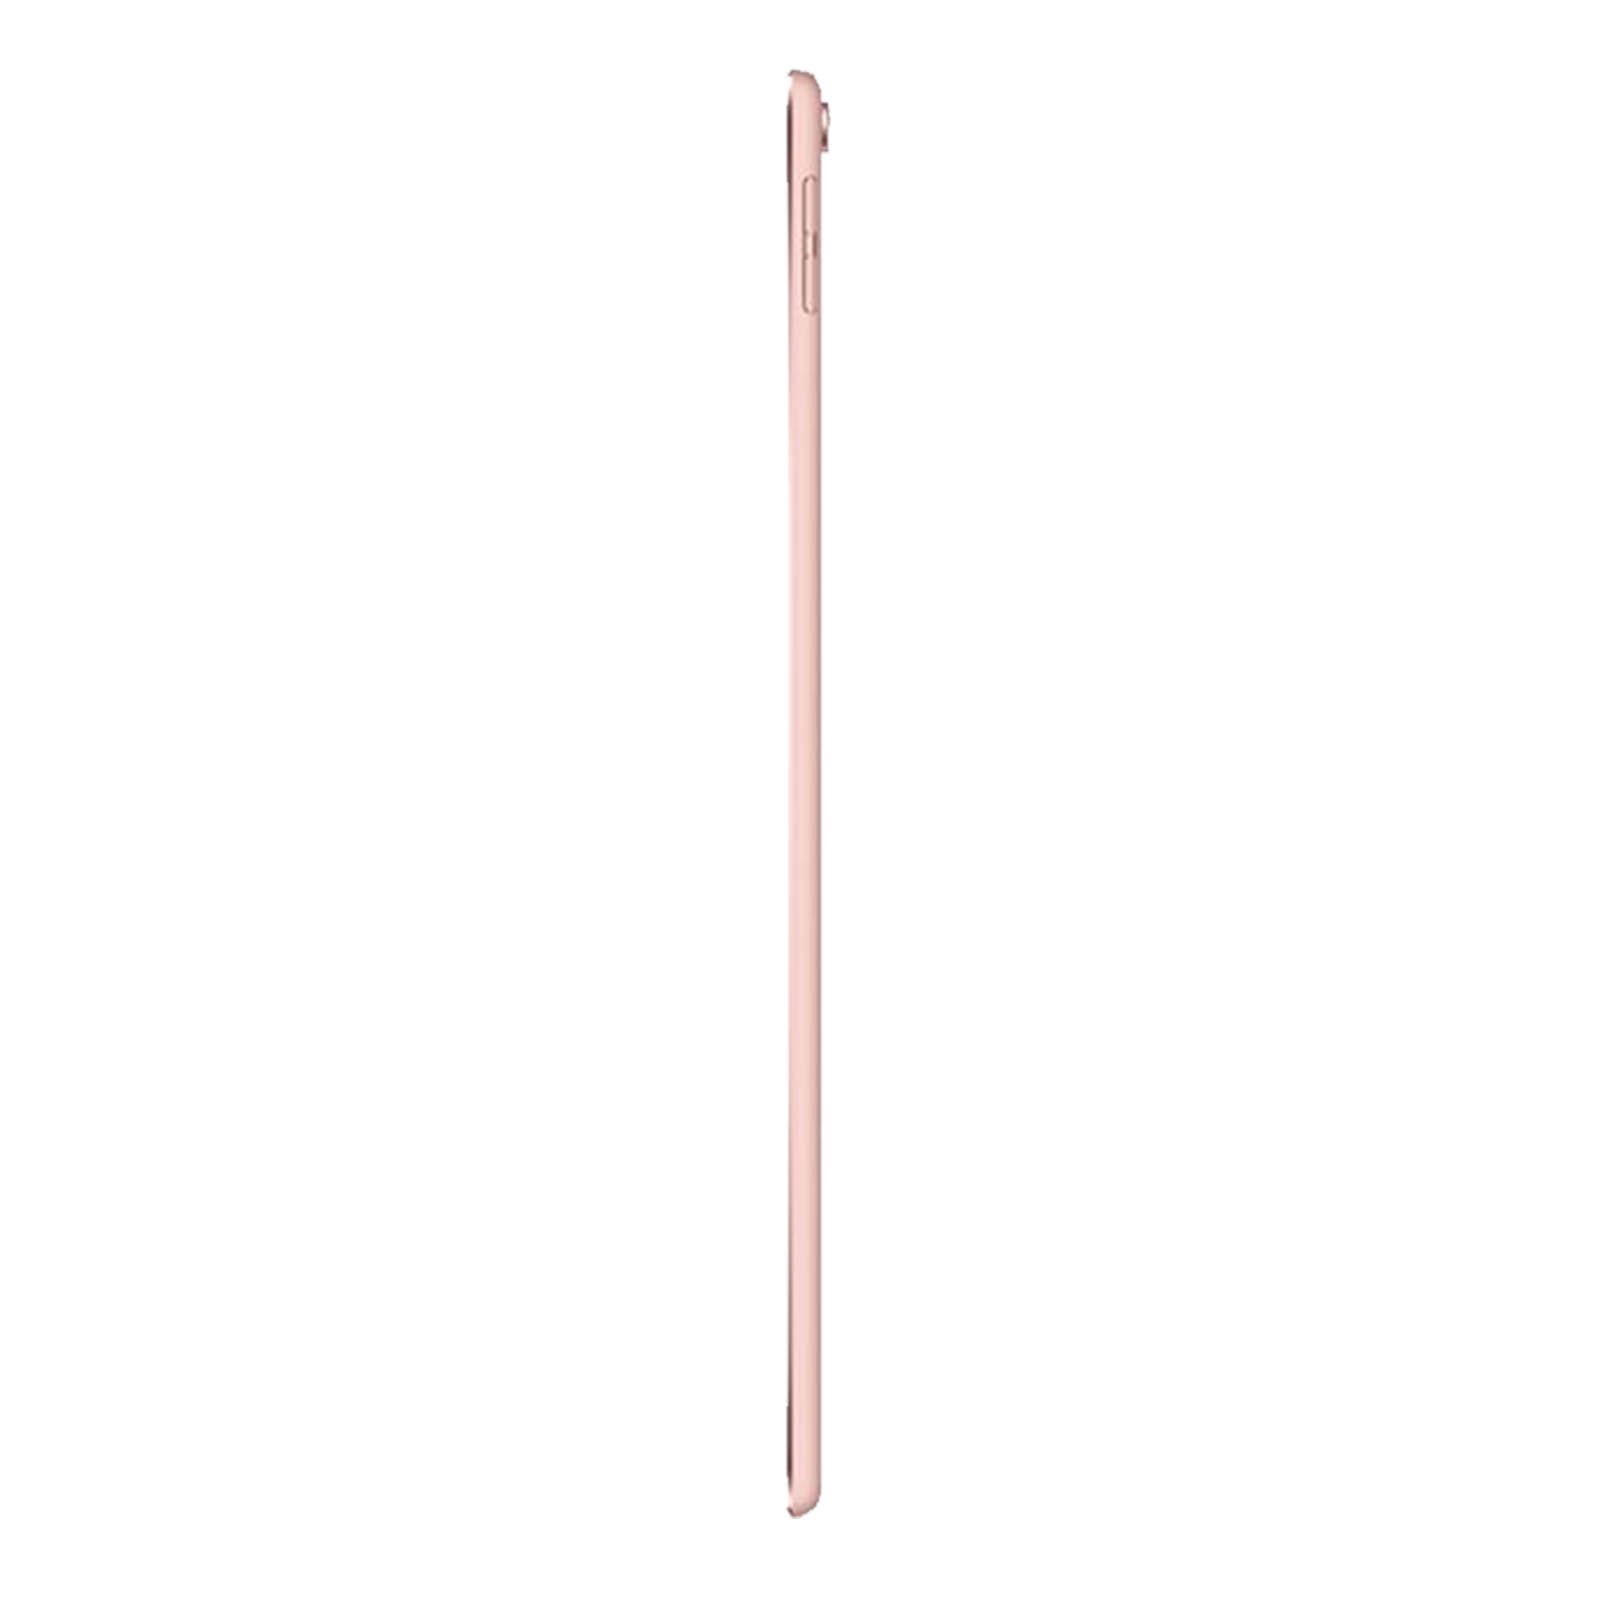 iPad Pro 10.5 Inch 512GB Rose Gold Good - Unlocked